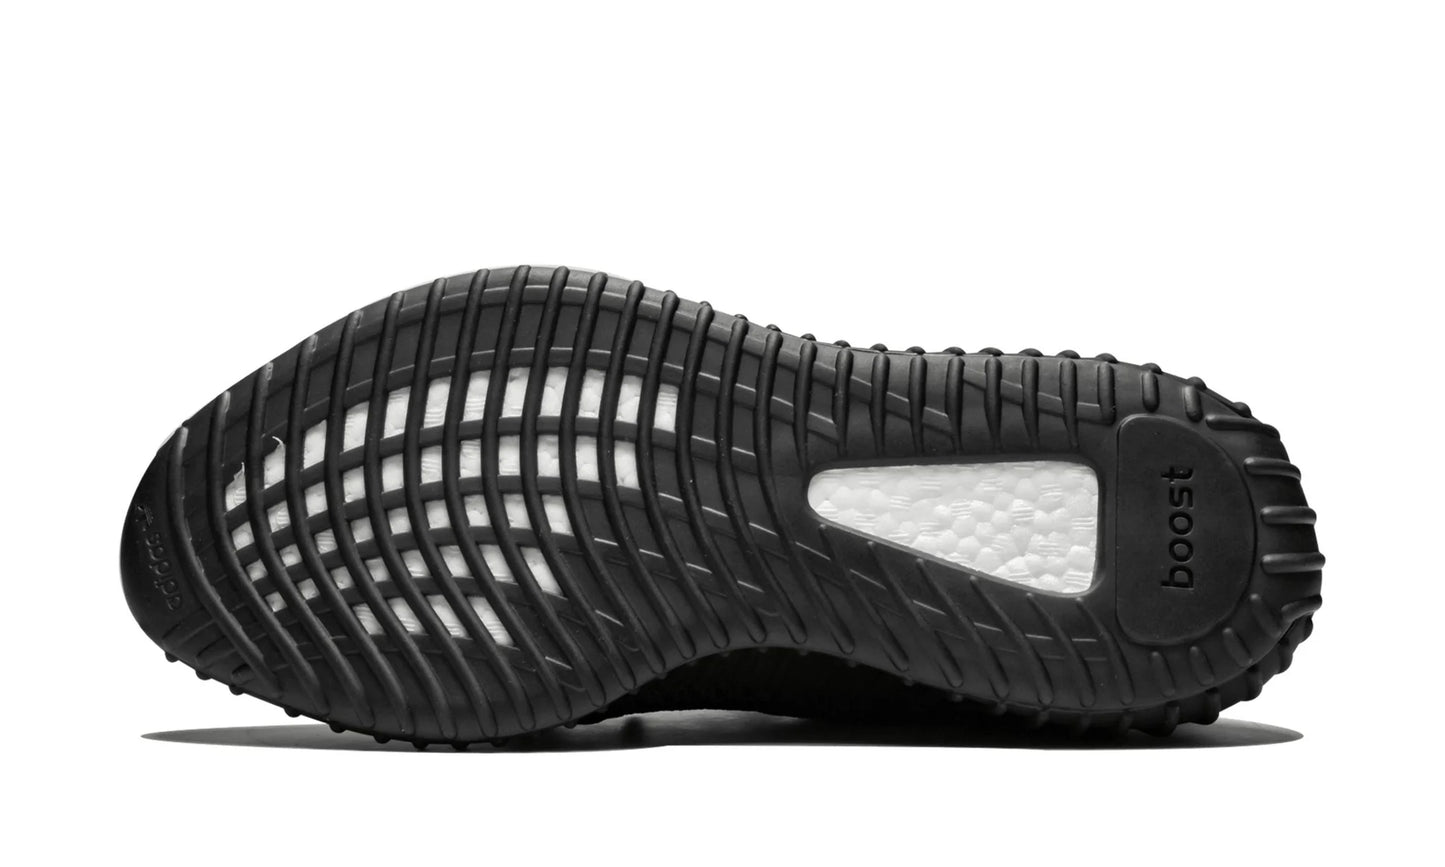 Adidas Yeezy Boost 350 V2 Black (Non-Reflective)